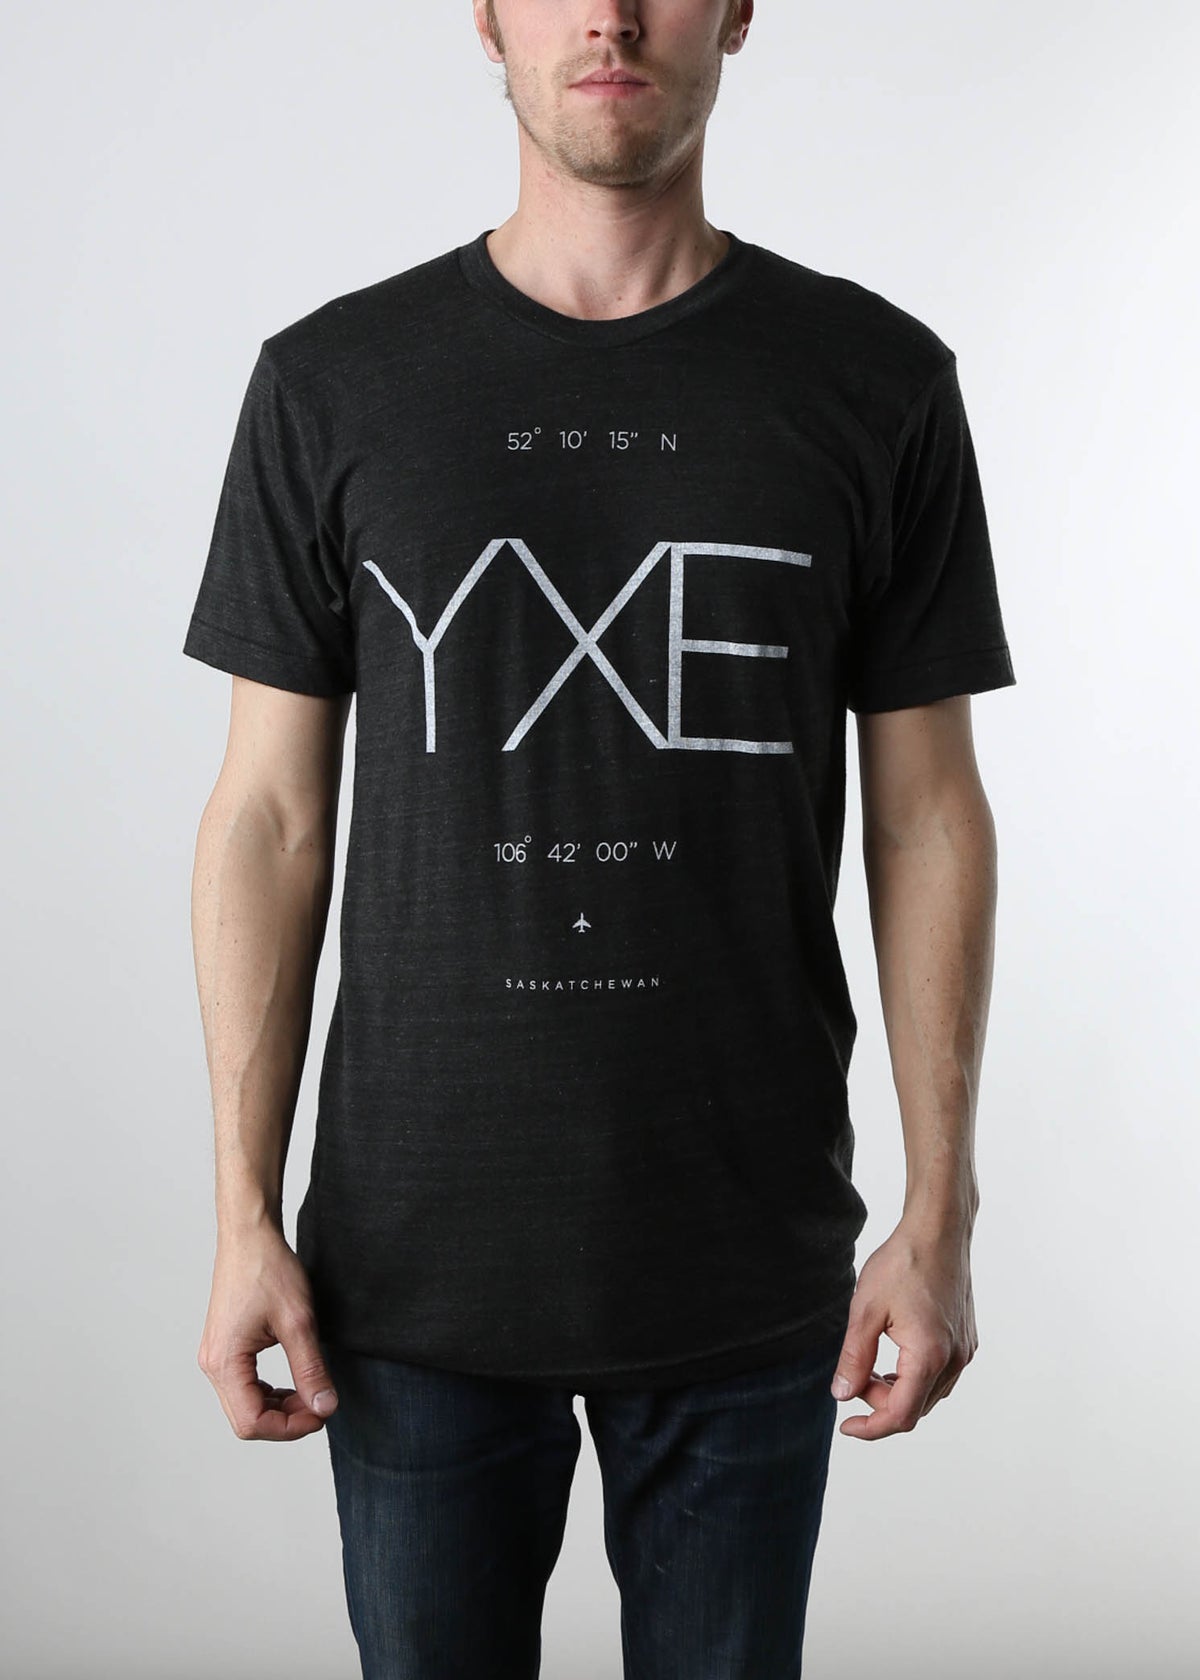 YXE Coordinates Tee | Tri-Black | Unisex and Ladies - Hardpressed Print Studio